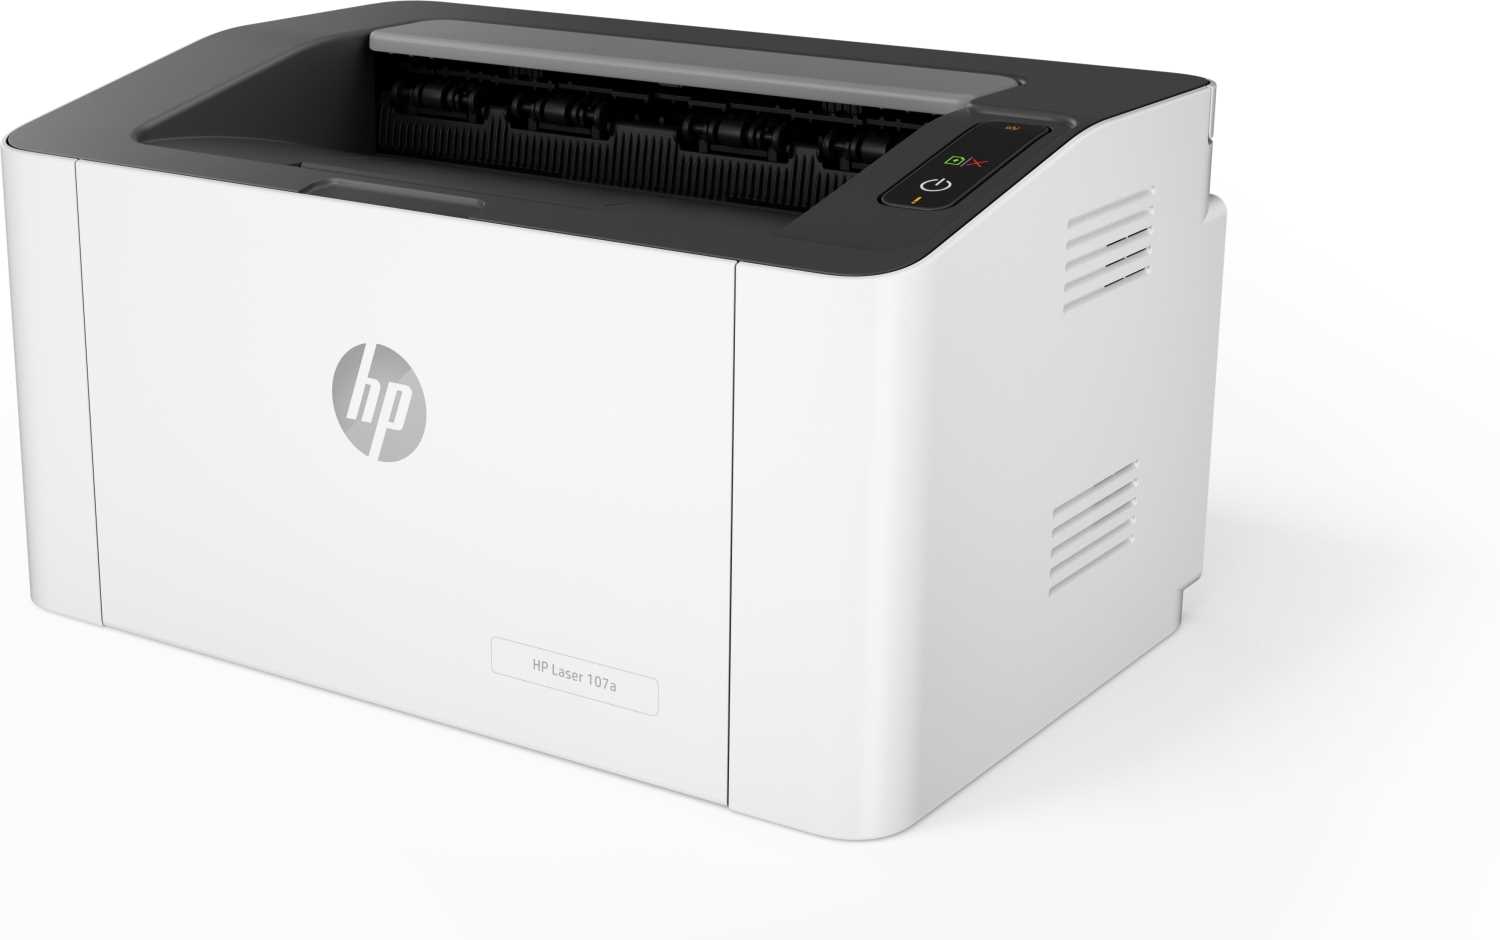 Принтер hp Laser 107a